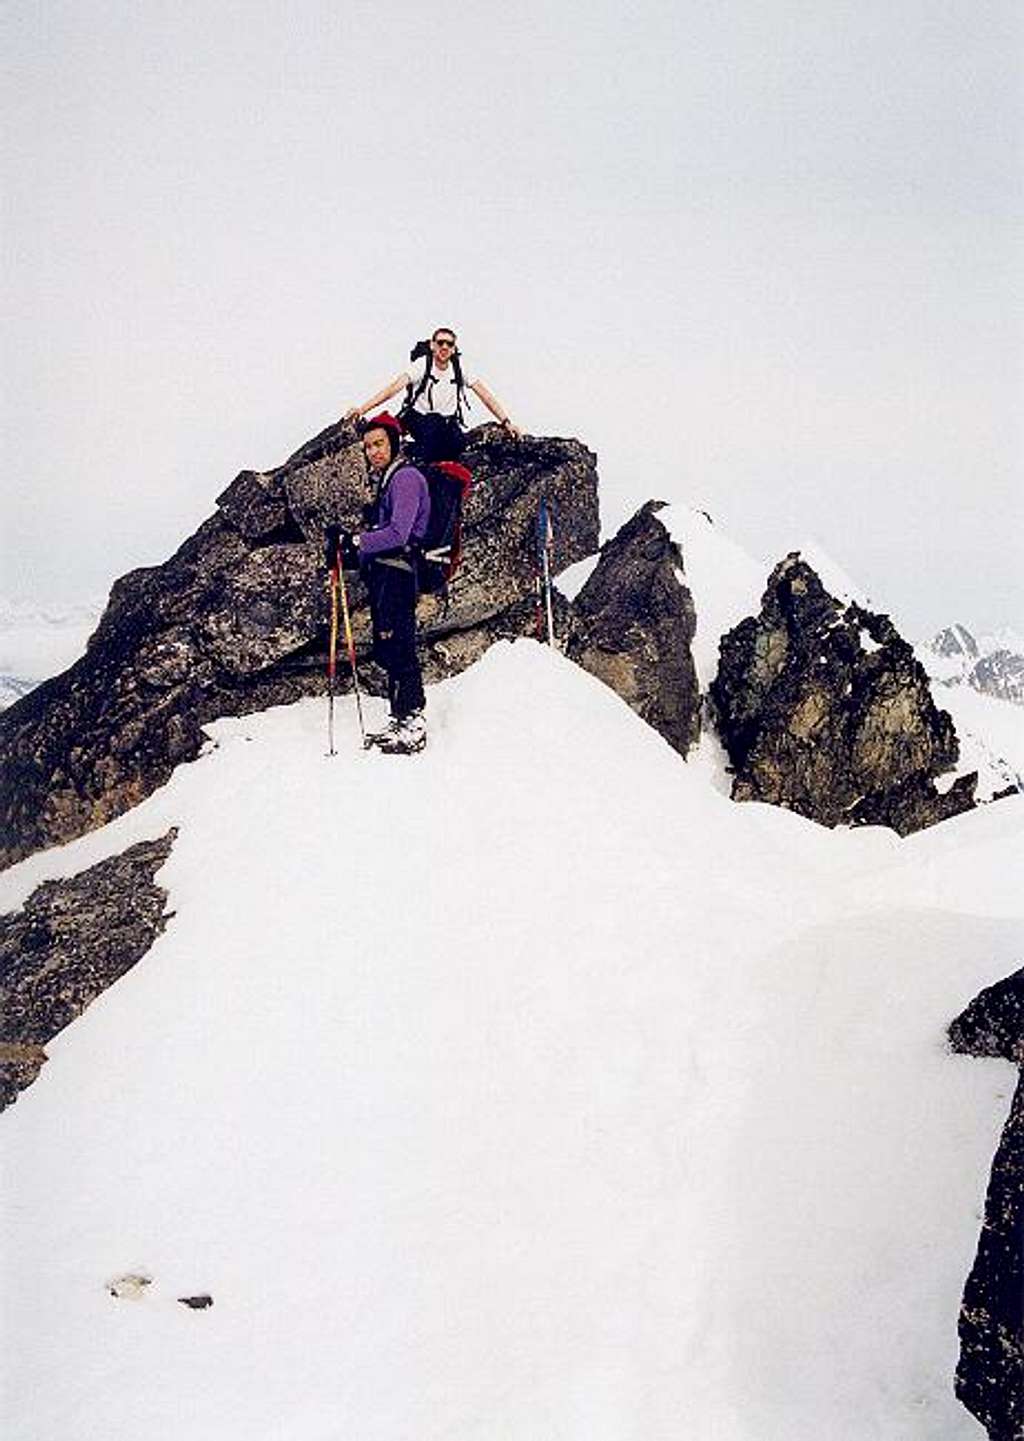 The summit ridge in winter...